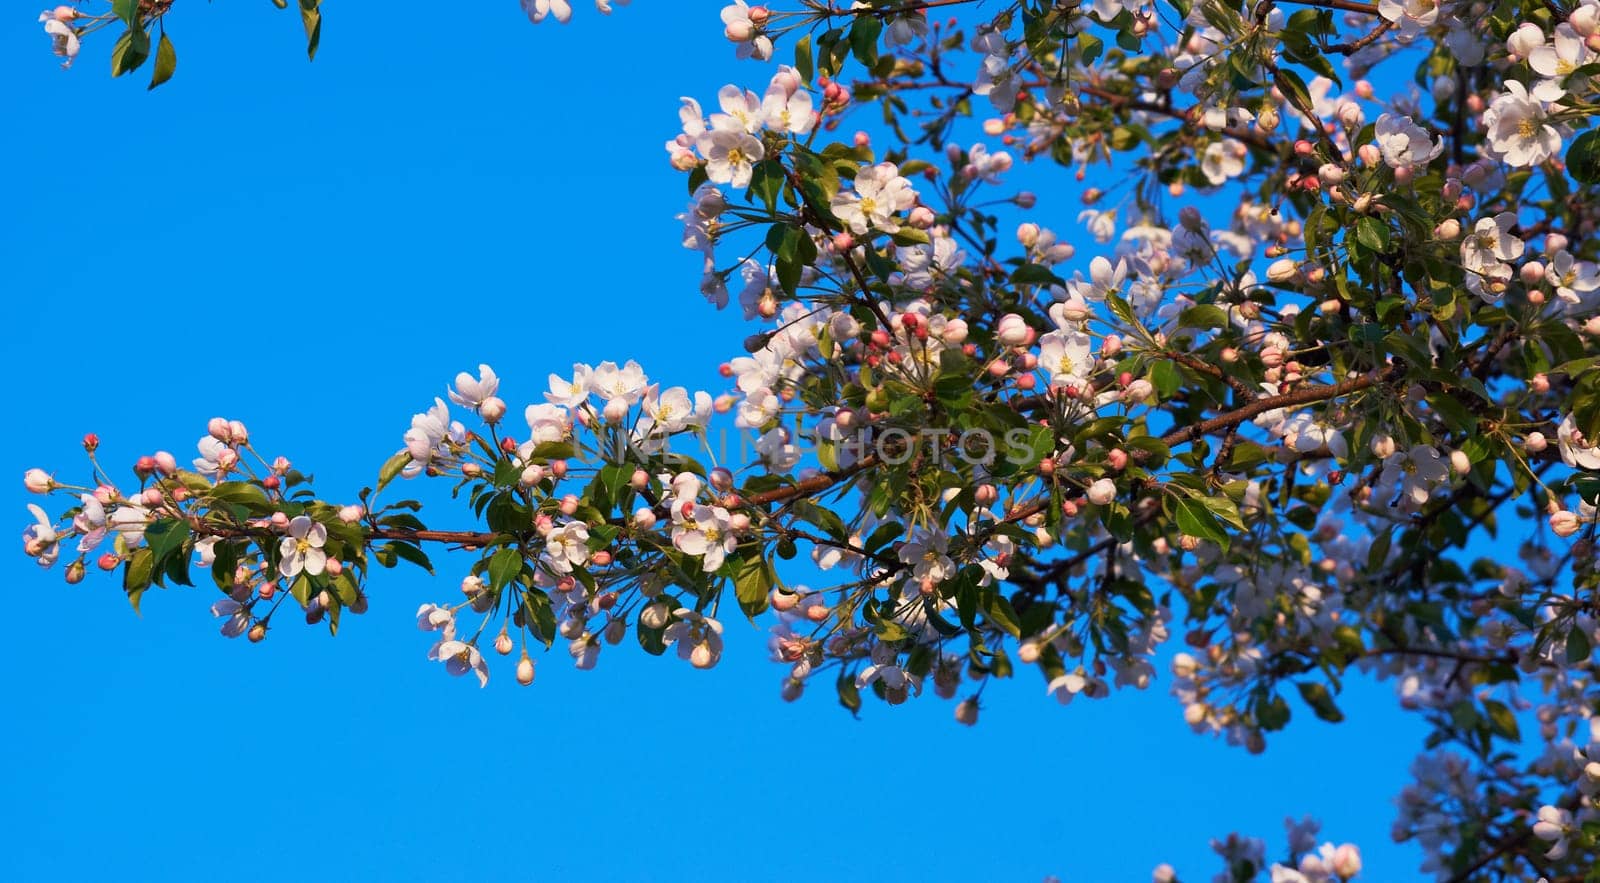 spring flowering of an apple tree against a blue sky by Севостьянов